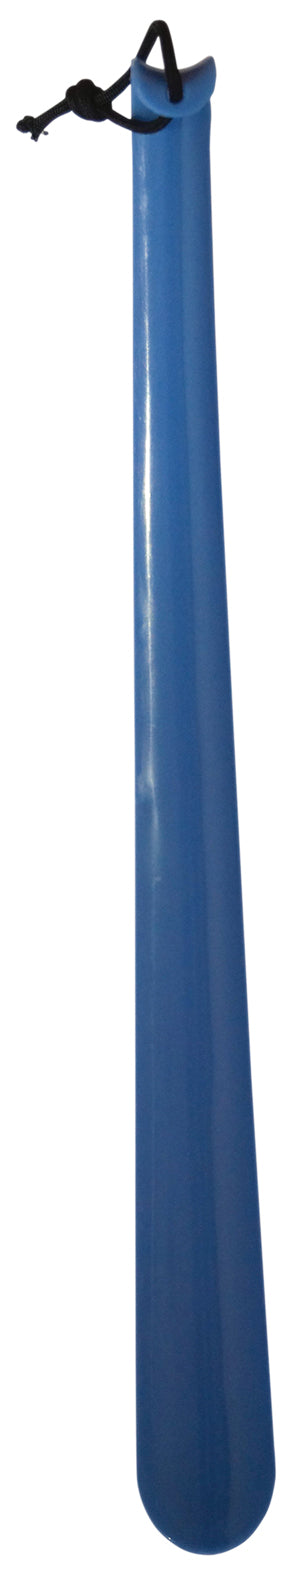 Plastic Shoehorn Blue